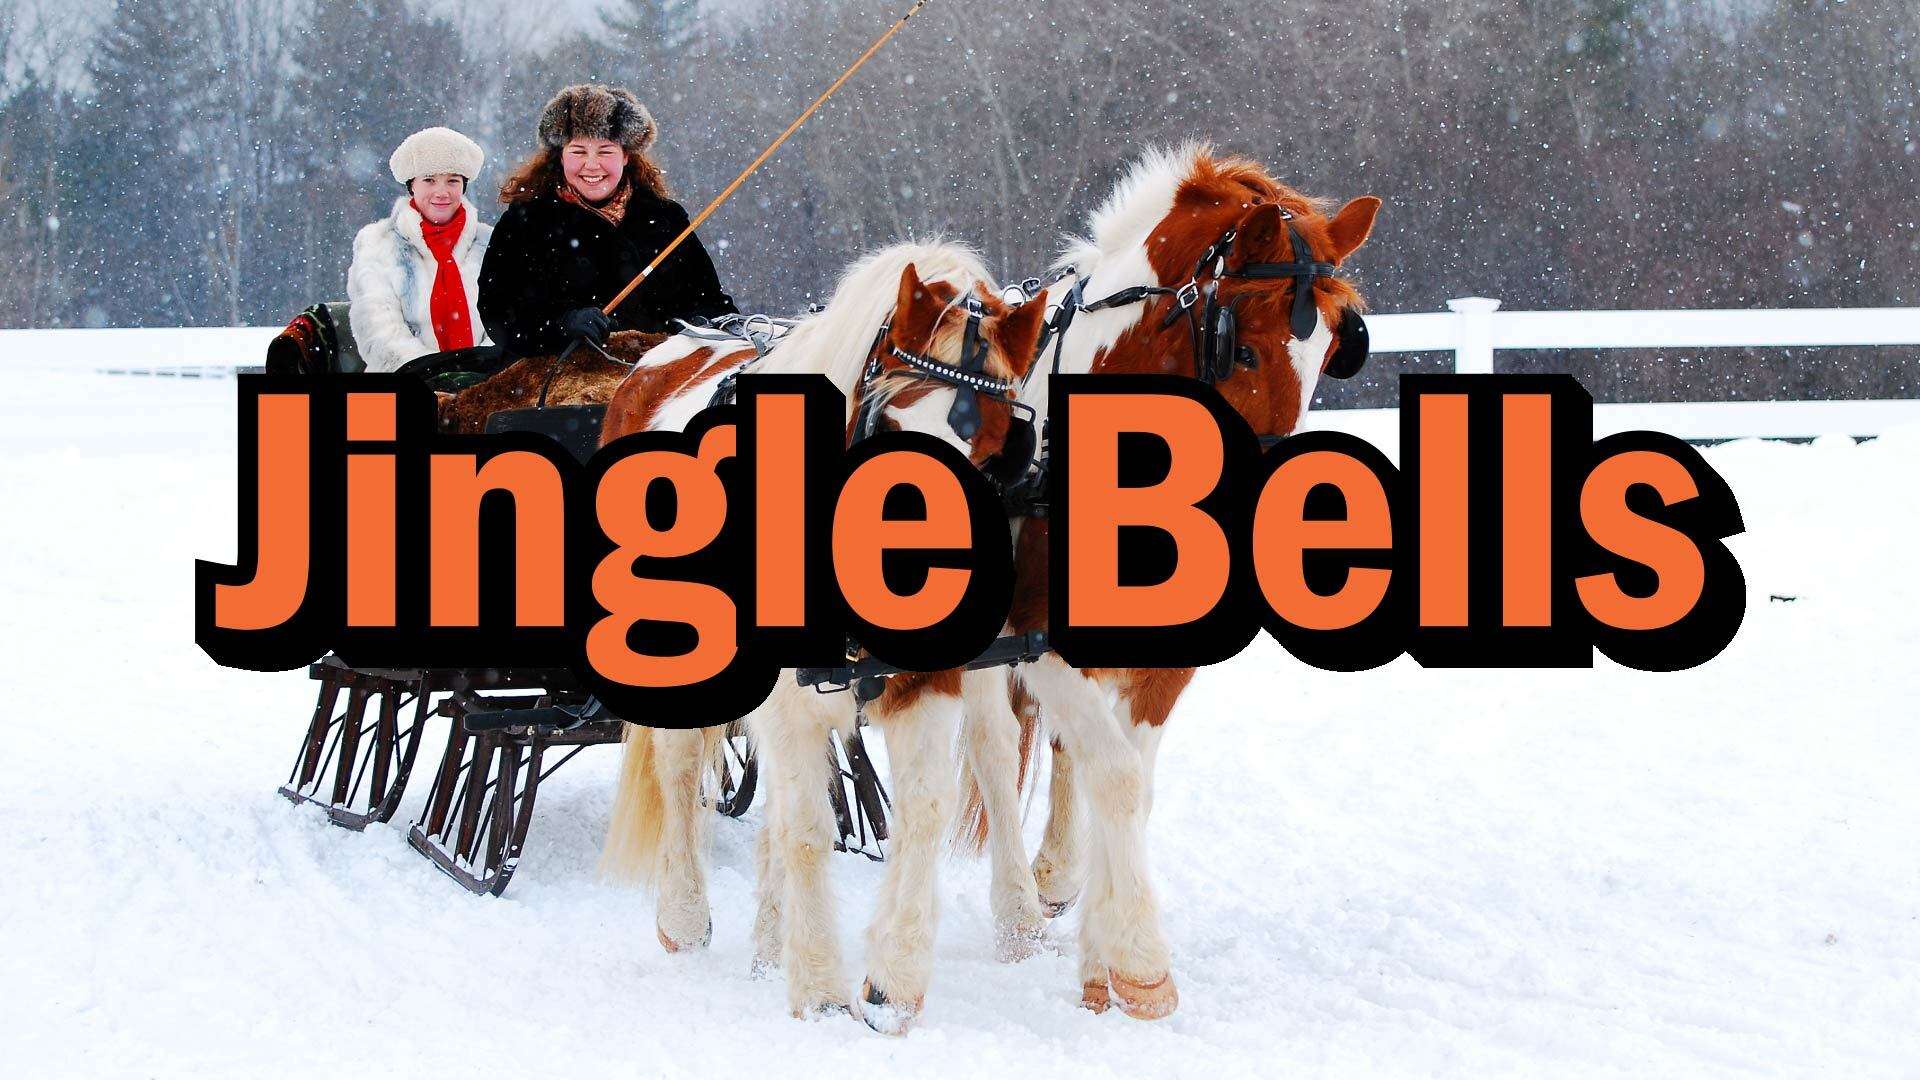 Jungle Bells, Christmas Song, Animal Song